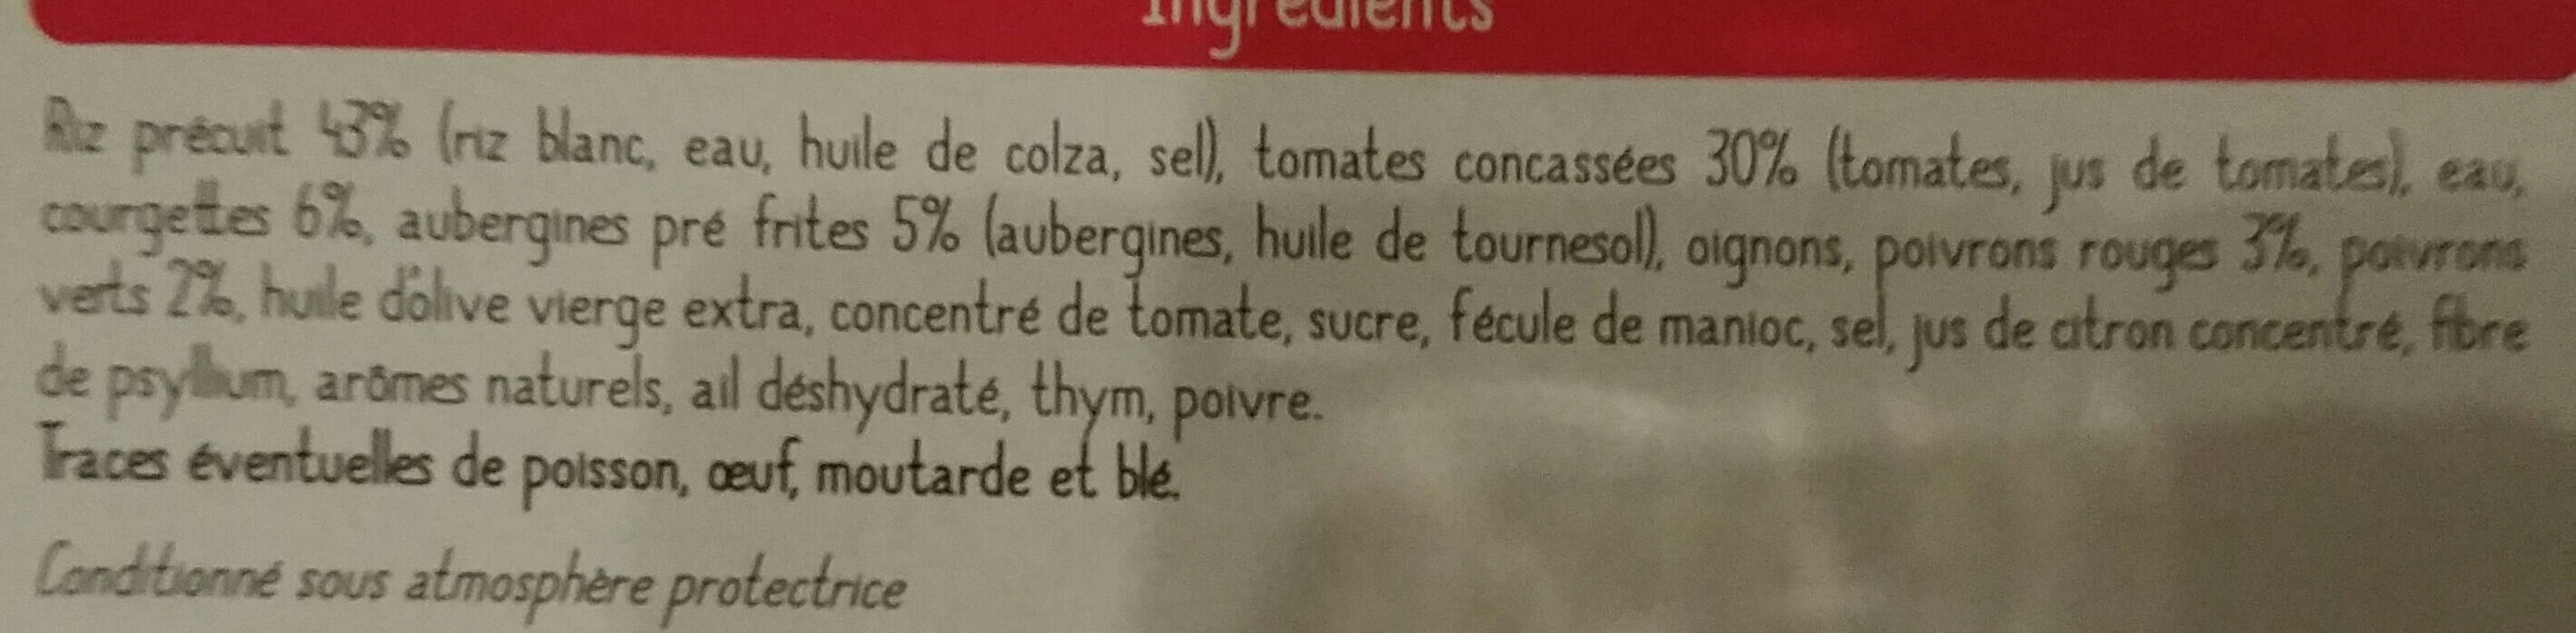 Petits legumes sauce provençale et riz - Ingrediënten - fr